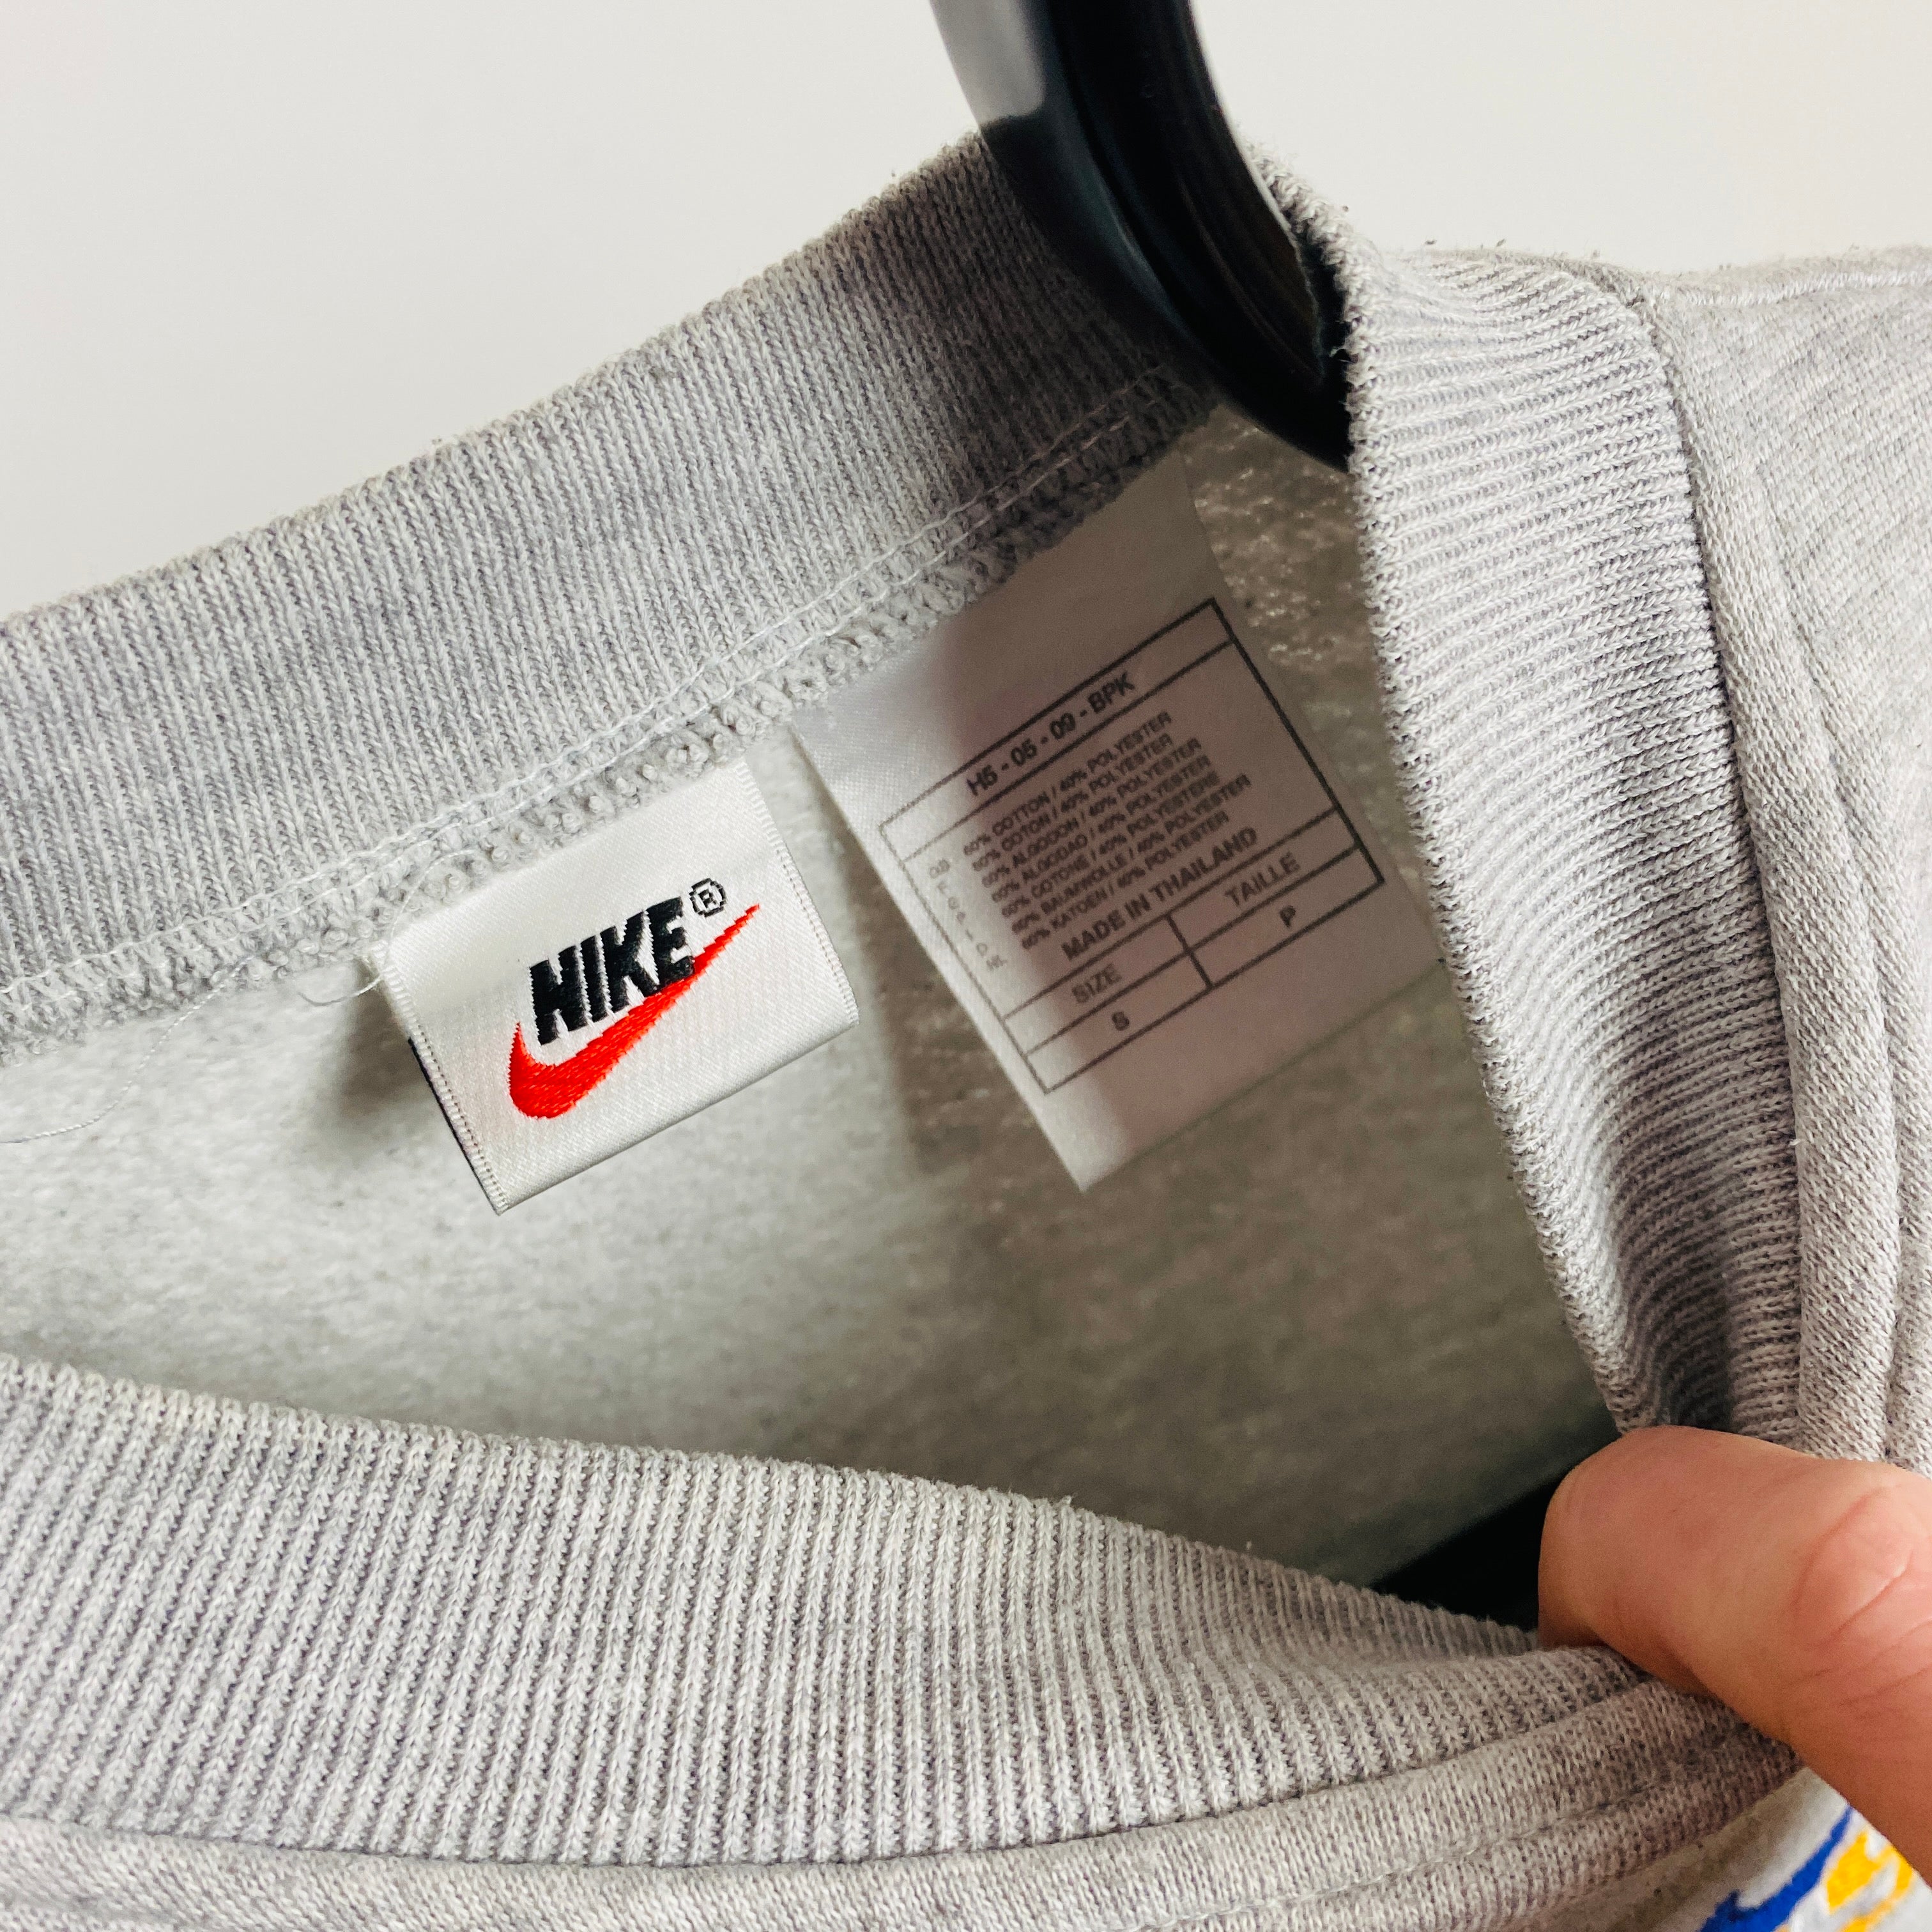 90s Nike Sweatshirt Tee Top Grey XS